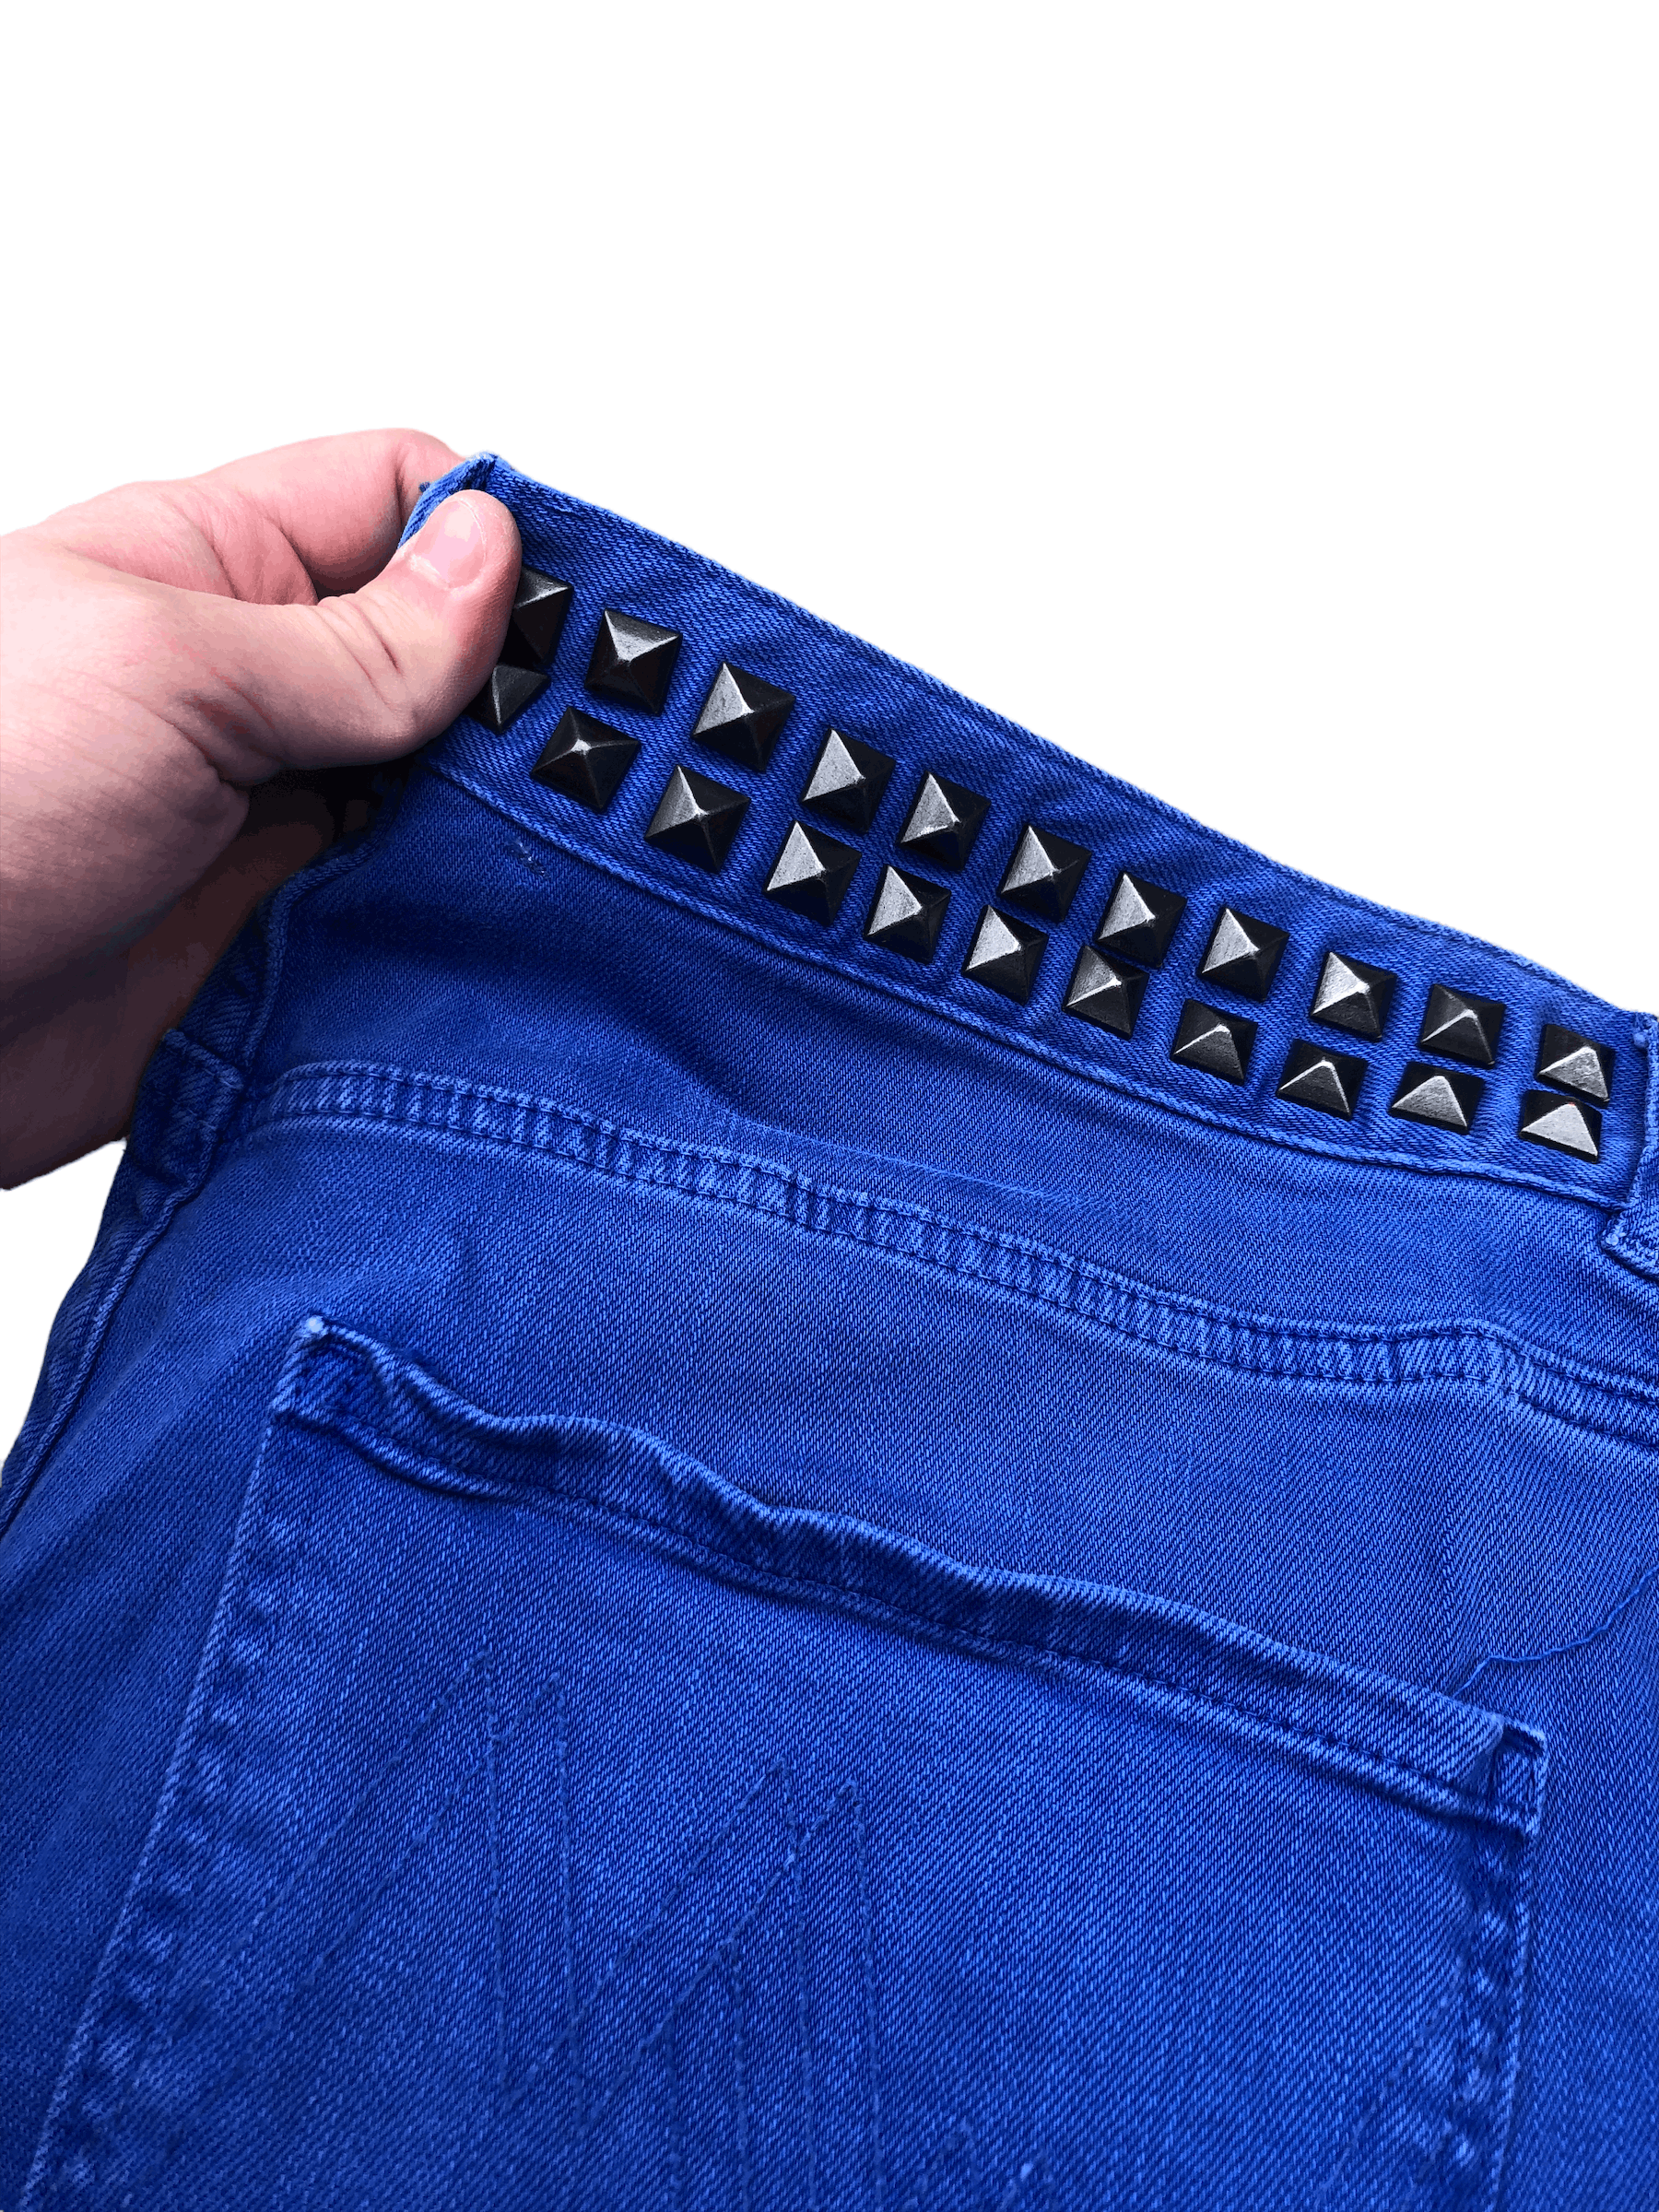 Vintage RARE Matthew Williamson X H&M Studded Jeans Size 34 Blue Size US 34 / EU 50 - 4 Thumbnail